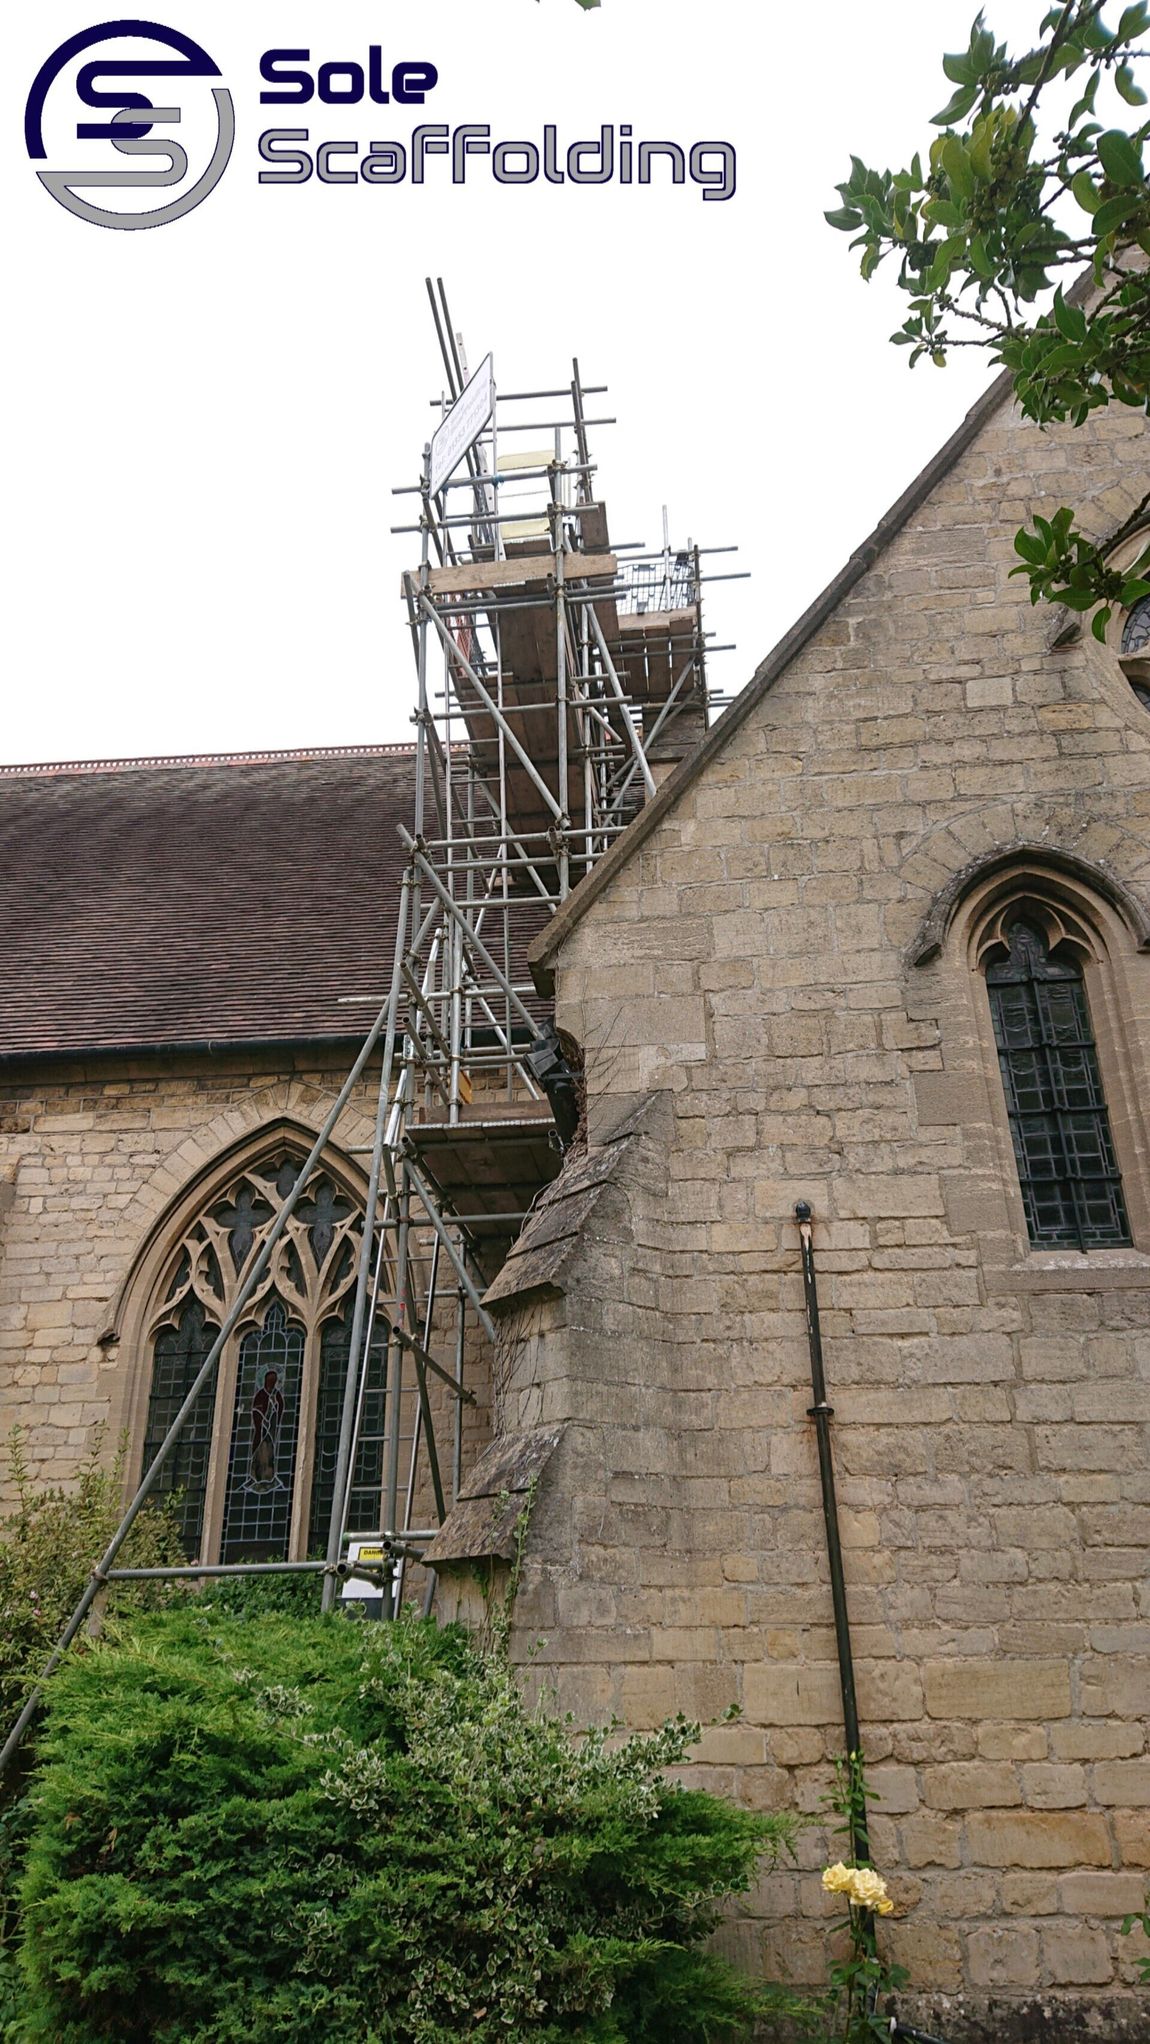 sole scaffolding - chimney scaffold for flue install in Ely